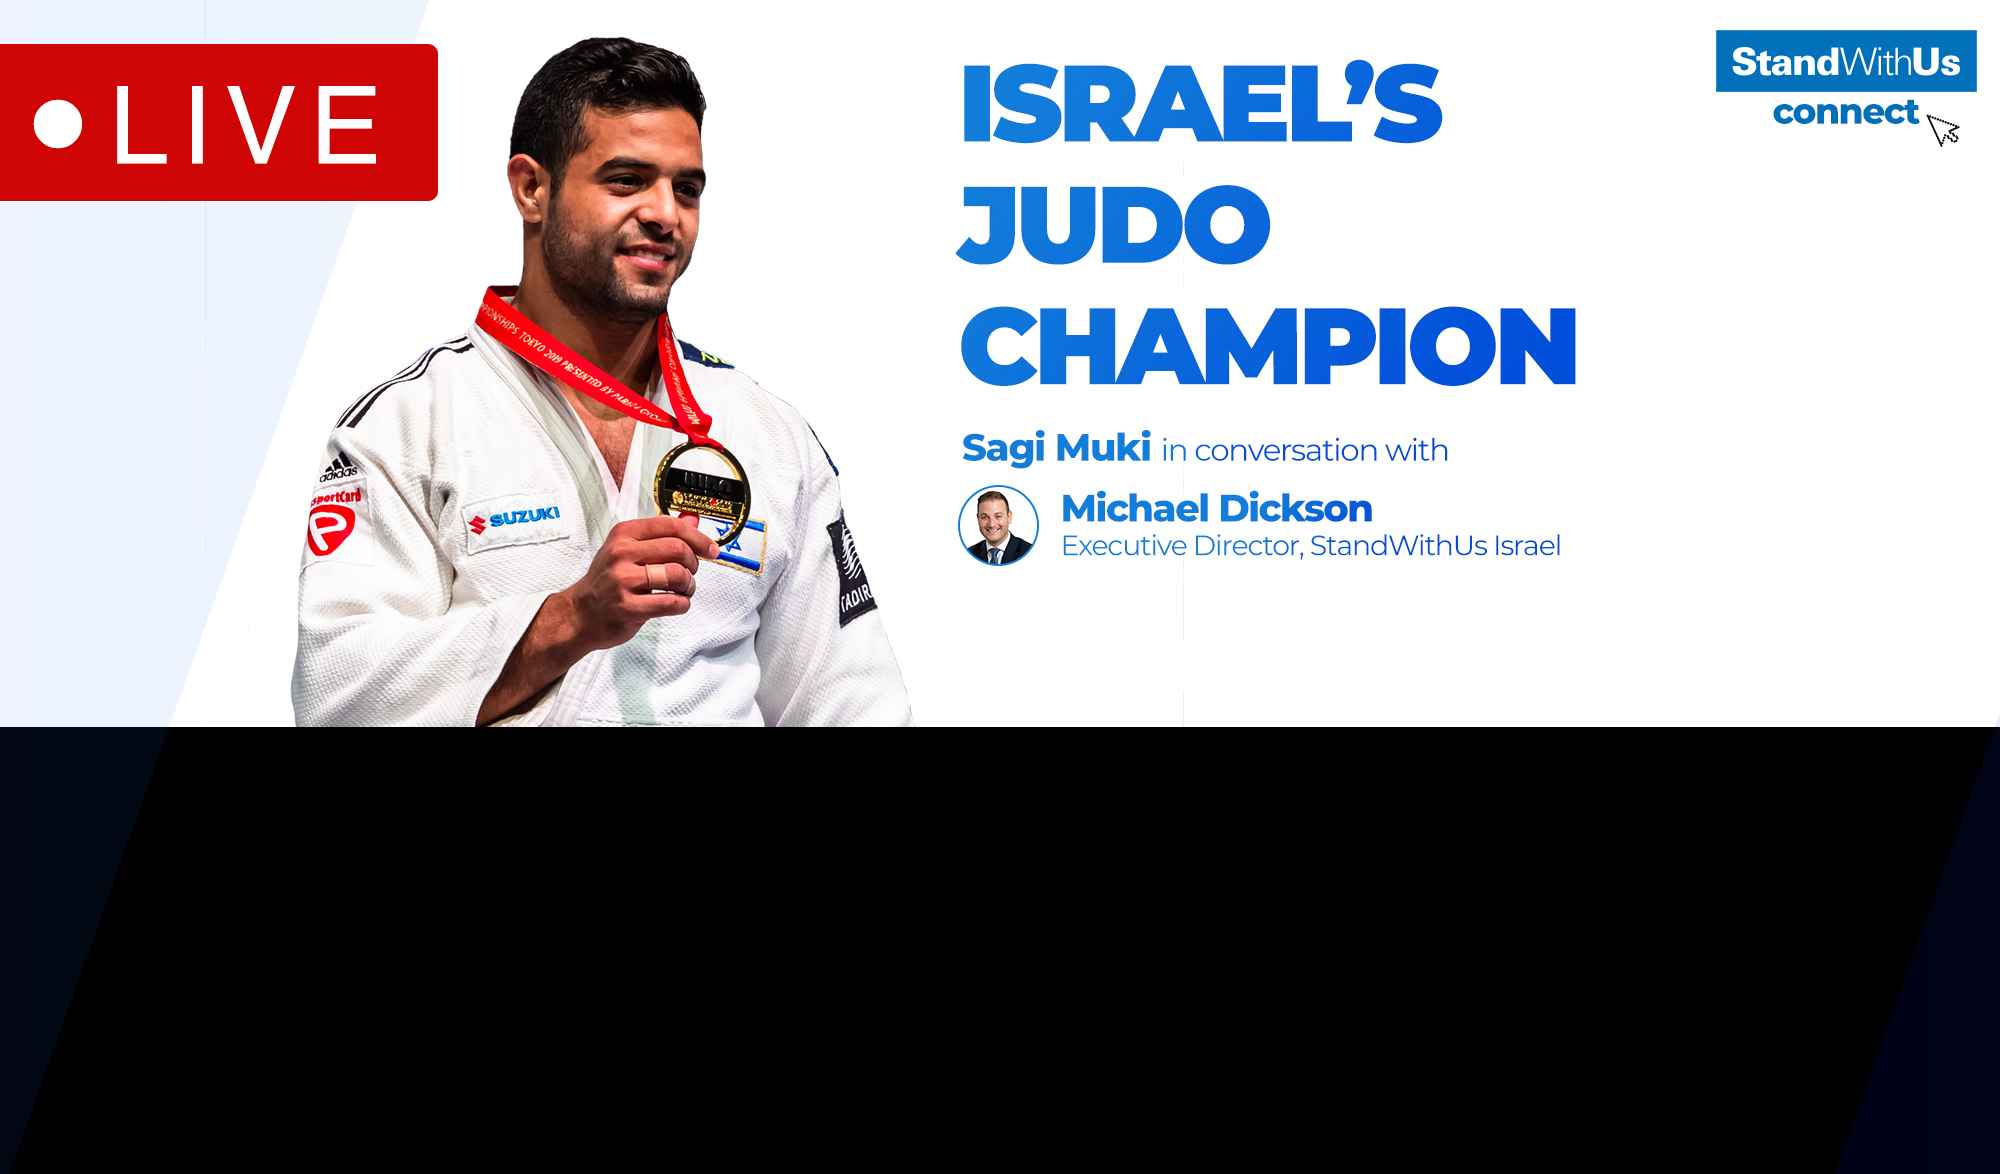 Israels Judo Champion